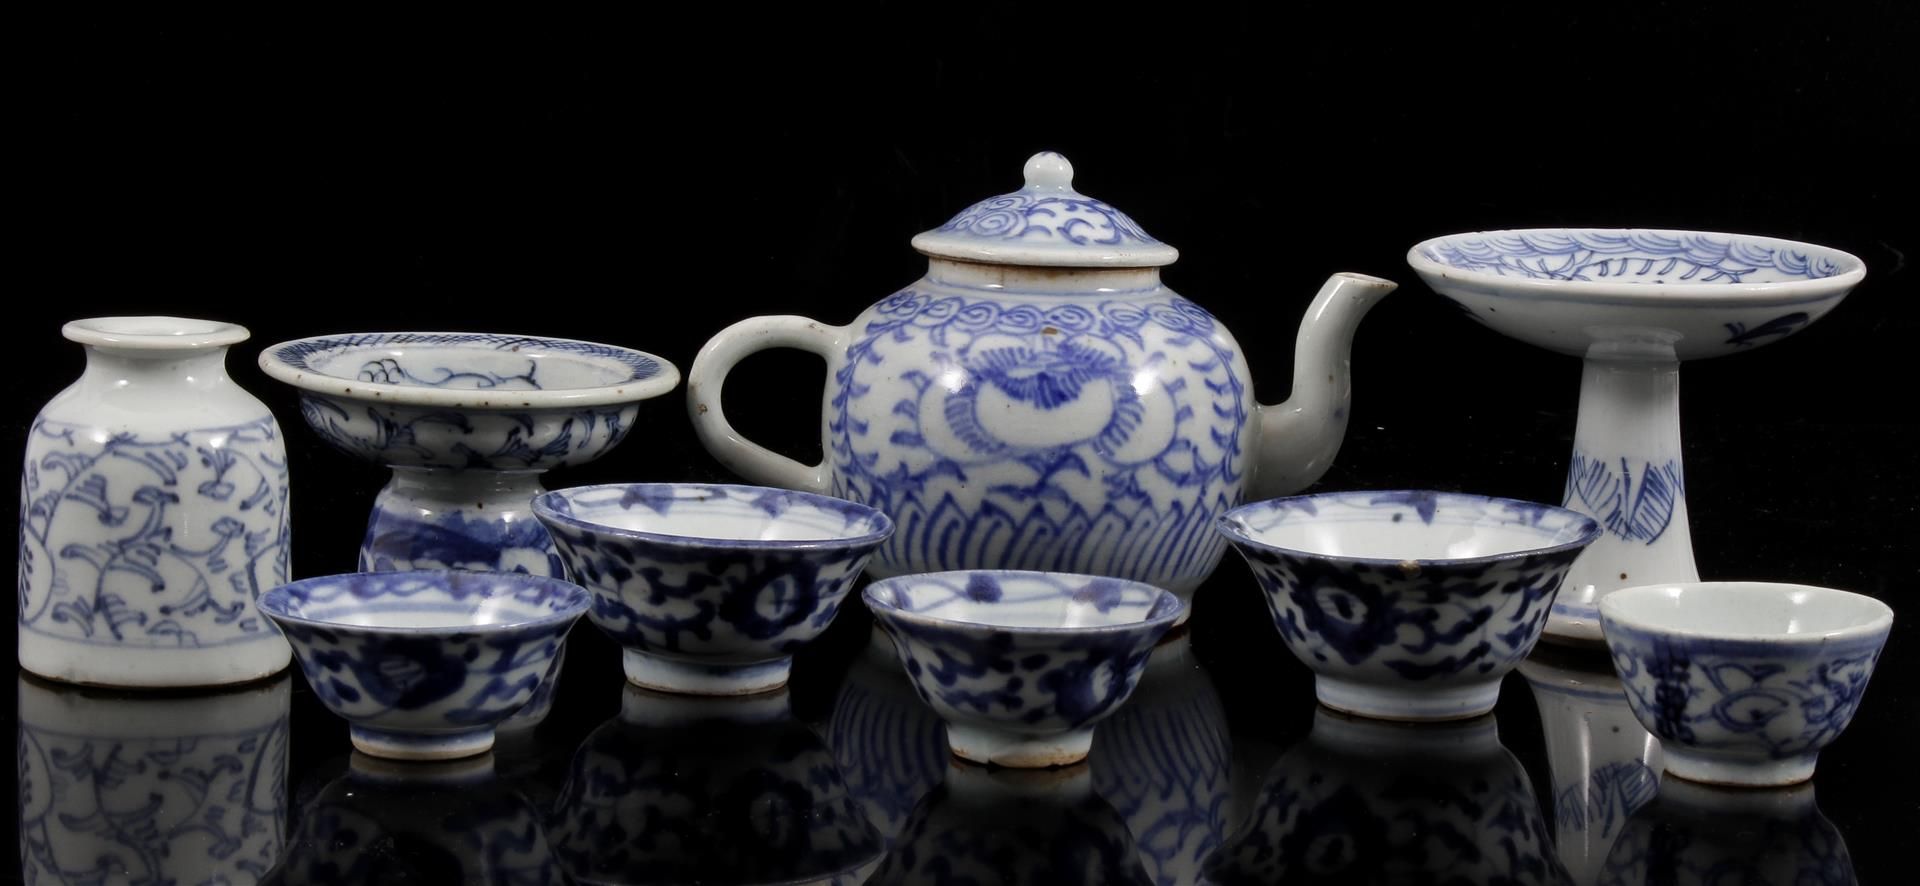 Bargain Asian porcelain including teapot, salt shakers, vase and bowls, 18th / 19th century